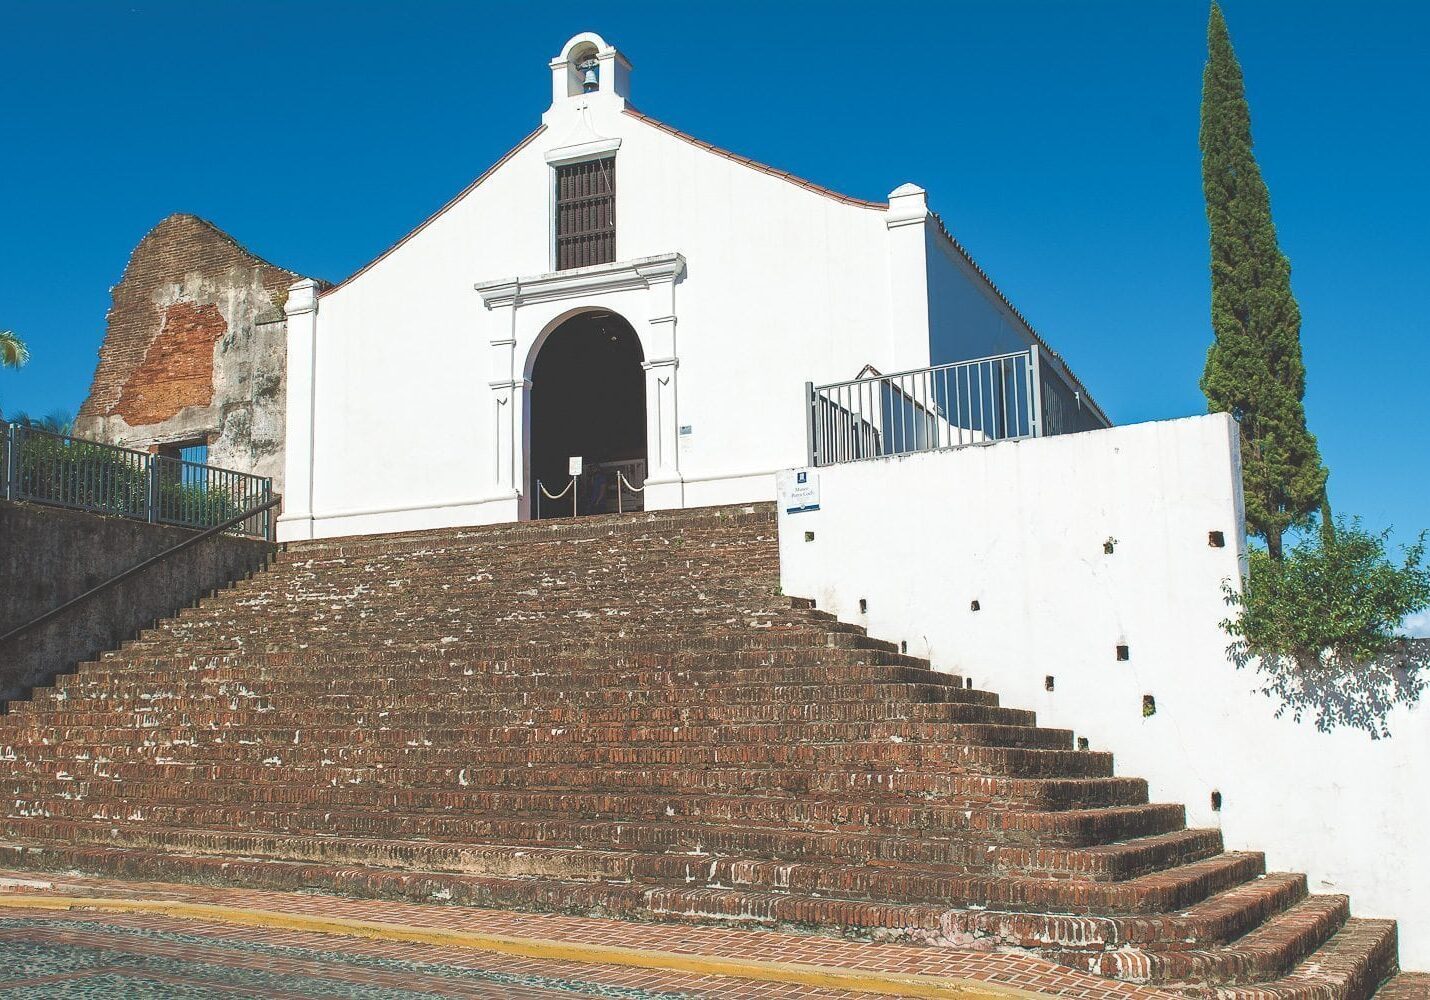 El Convento de Santo Domingo de Porta Coeli in Spanish, is one of the oldest church structures in the western hemisphere.